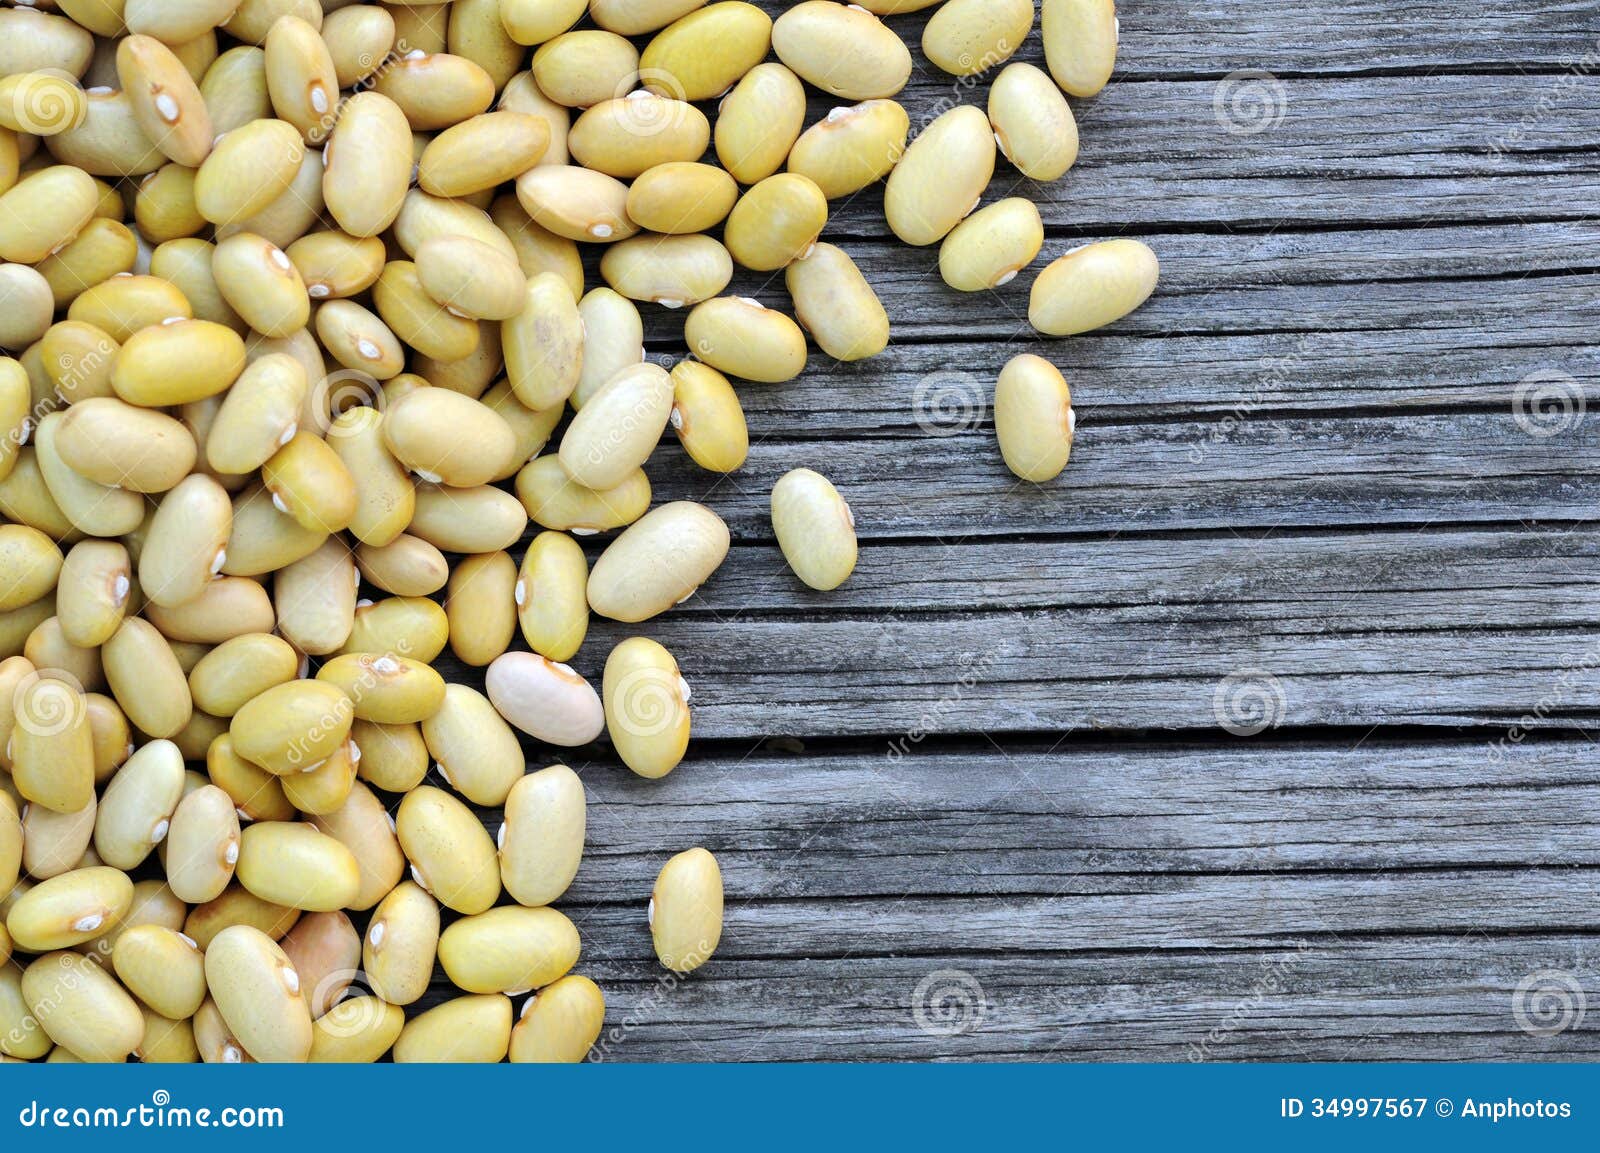 peruvian canary (peruano) beans